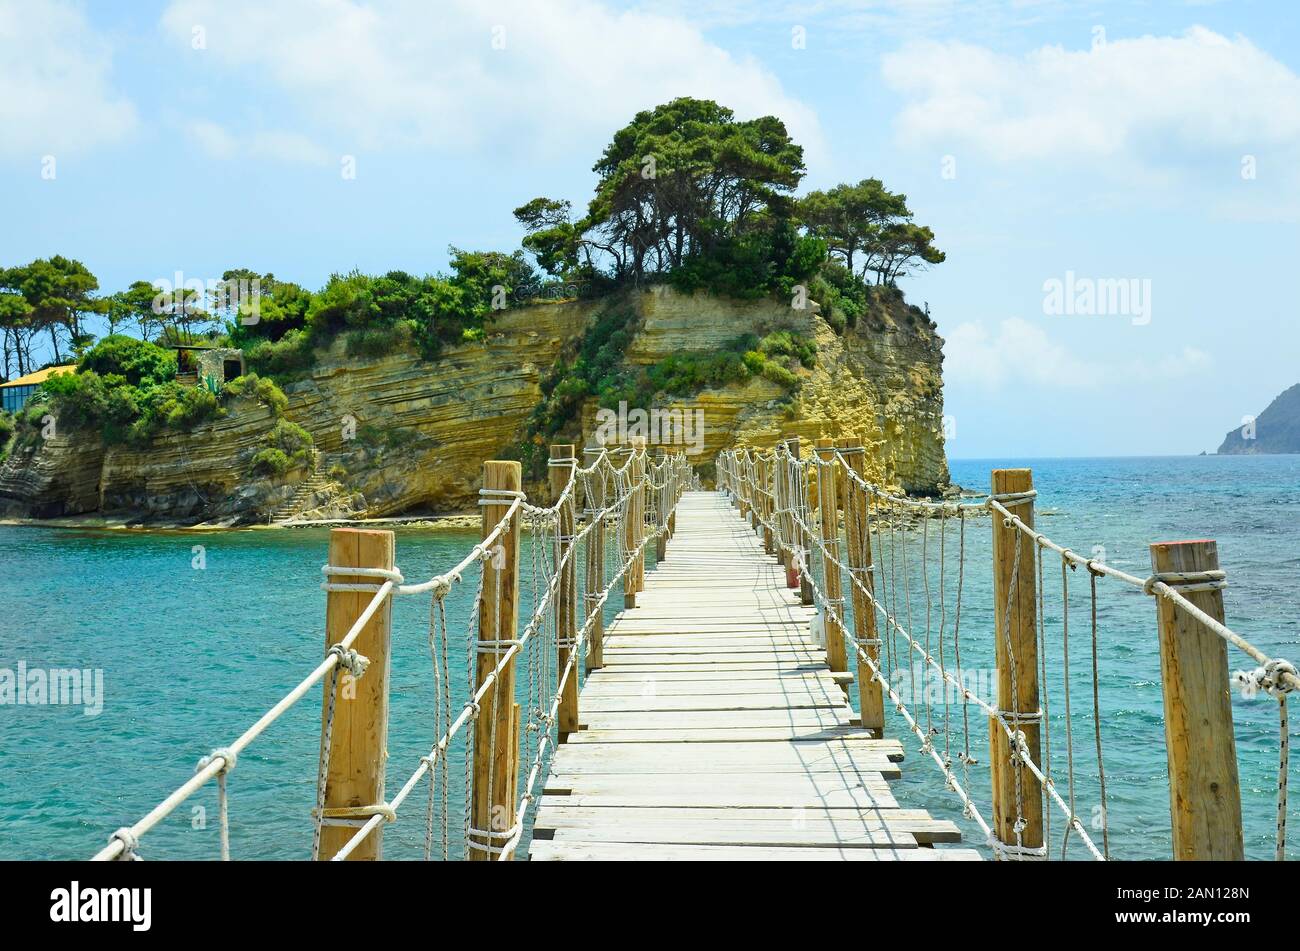 Greece, Zakynthos Island, footbridge to Cameo island Stock Photo